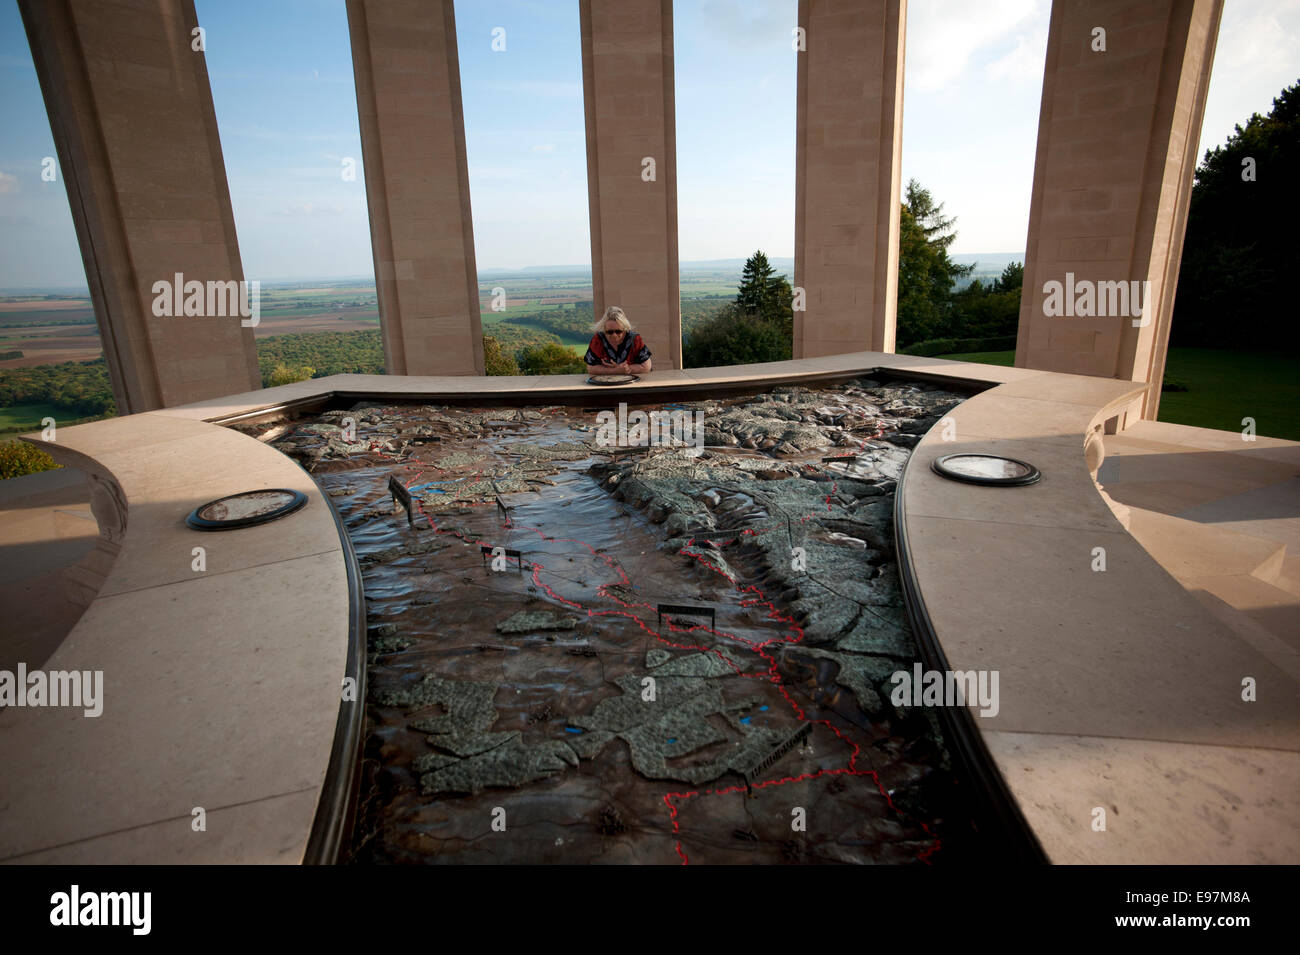 Butte de Montsec US Memorial in the St Mihiel Salient. WWI Battlefield south of Verdun, France. October 2014 Stock Photo